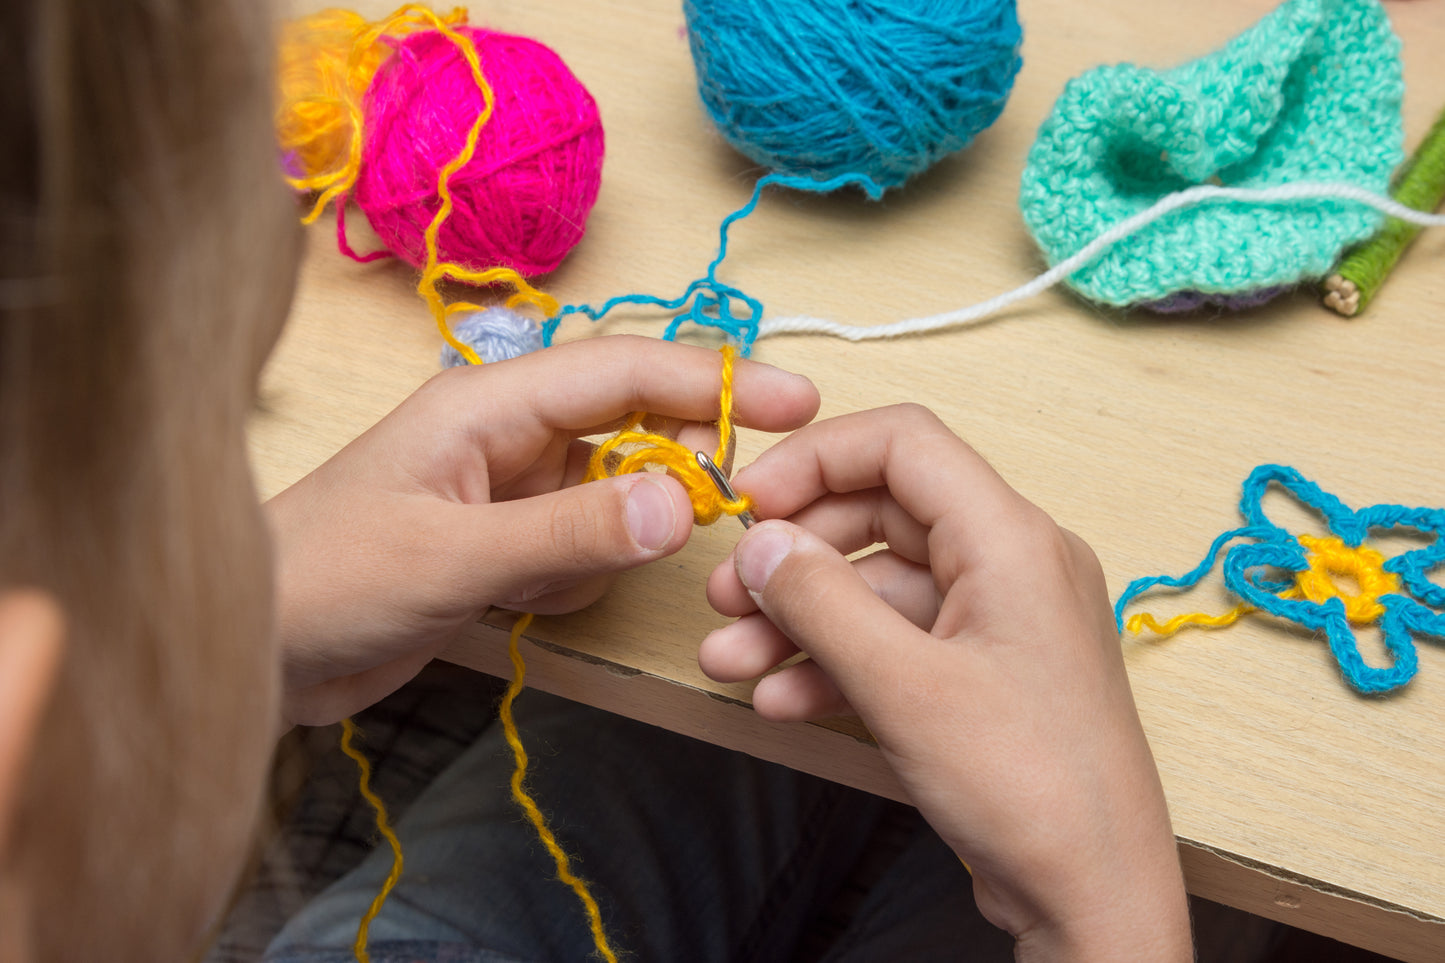 Knitting and Crochet